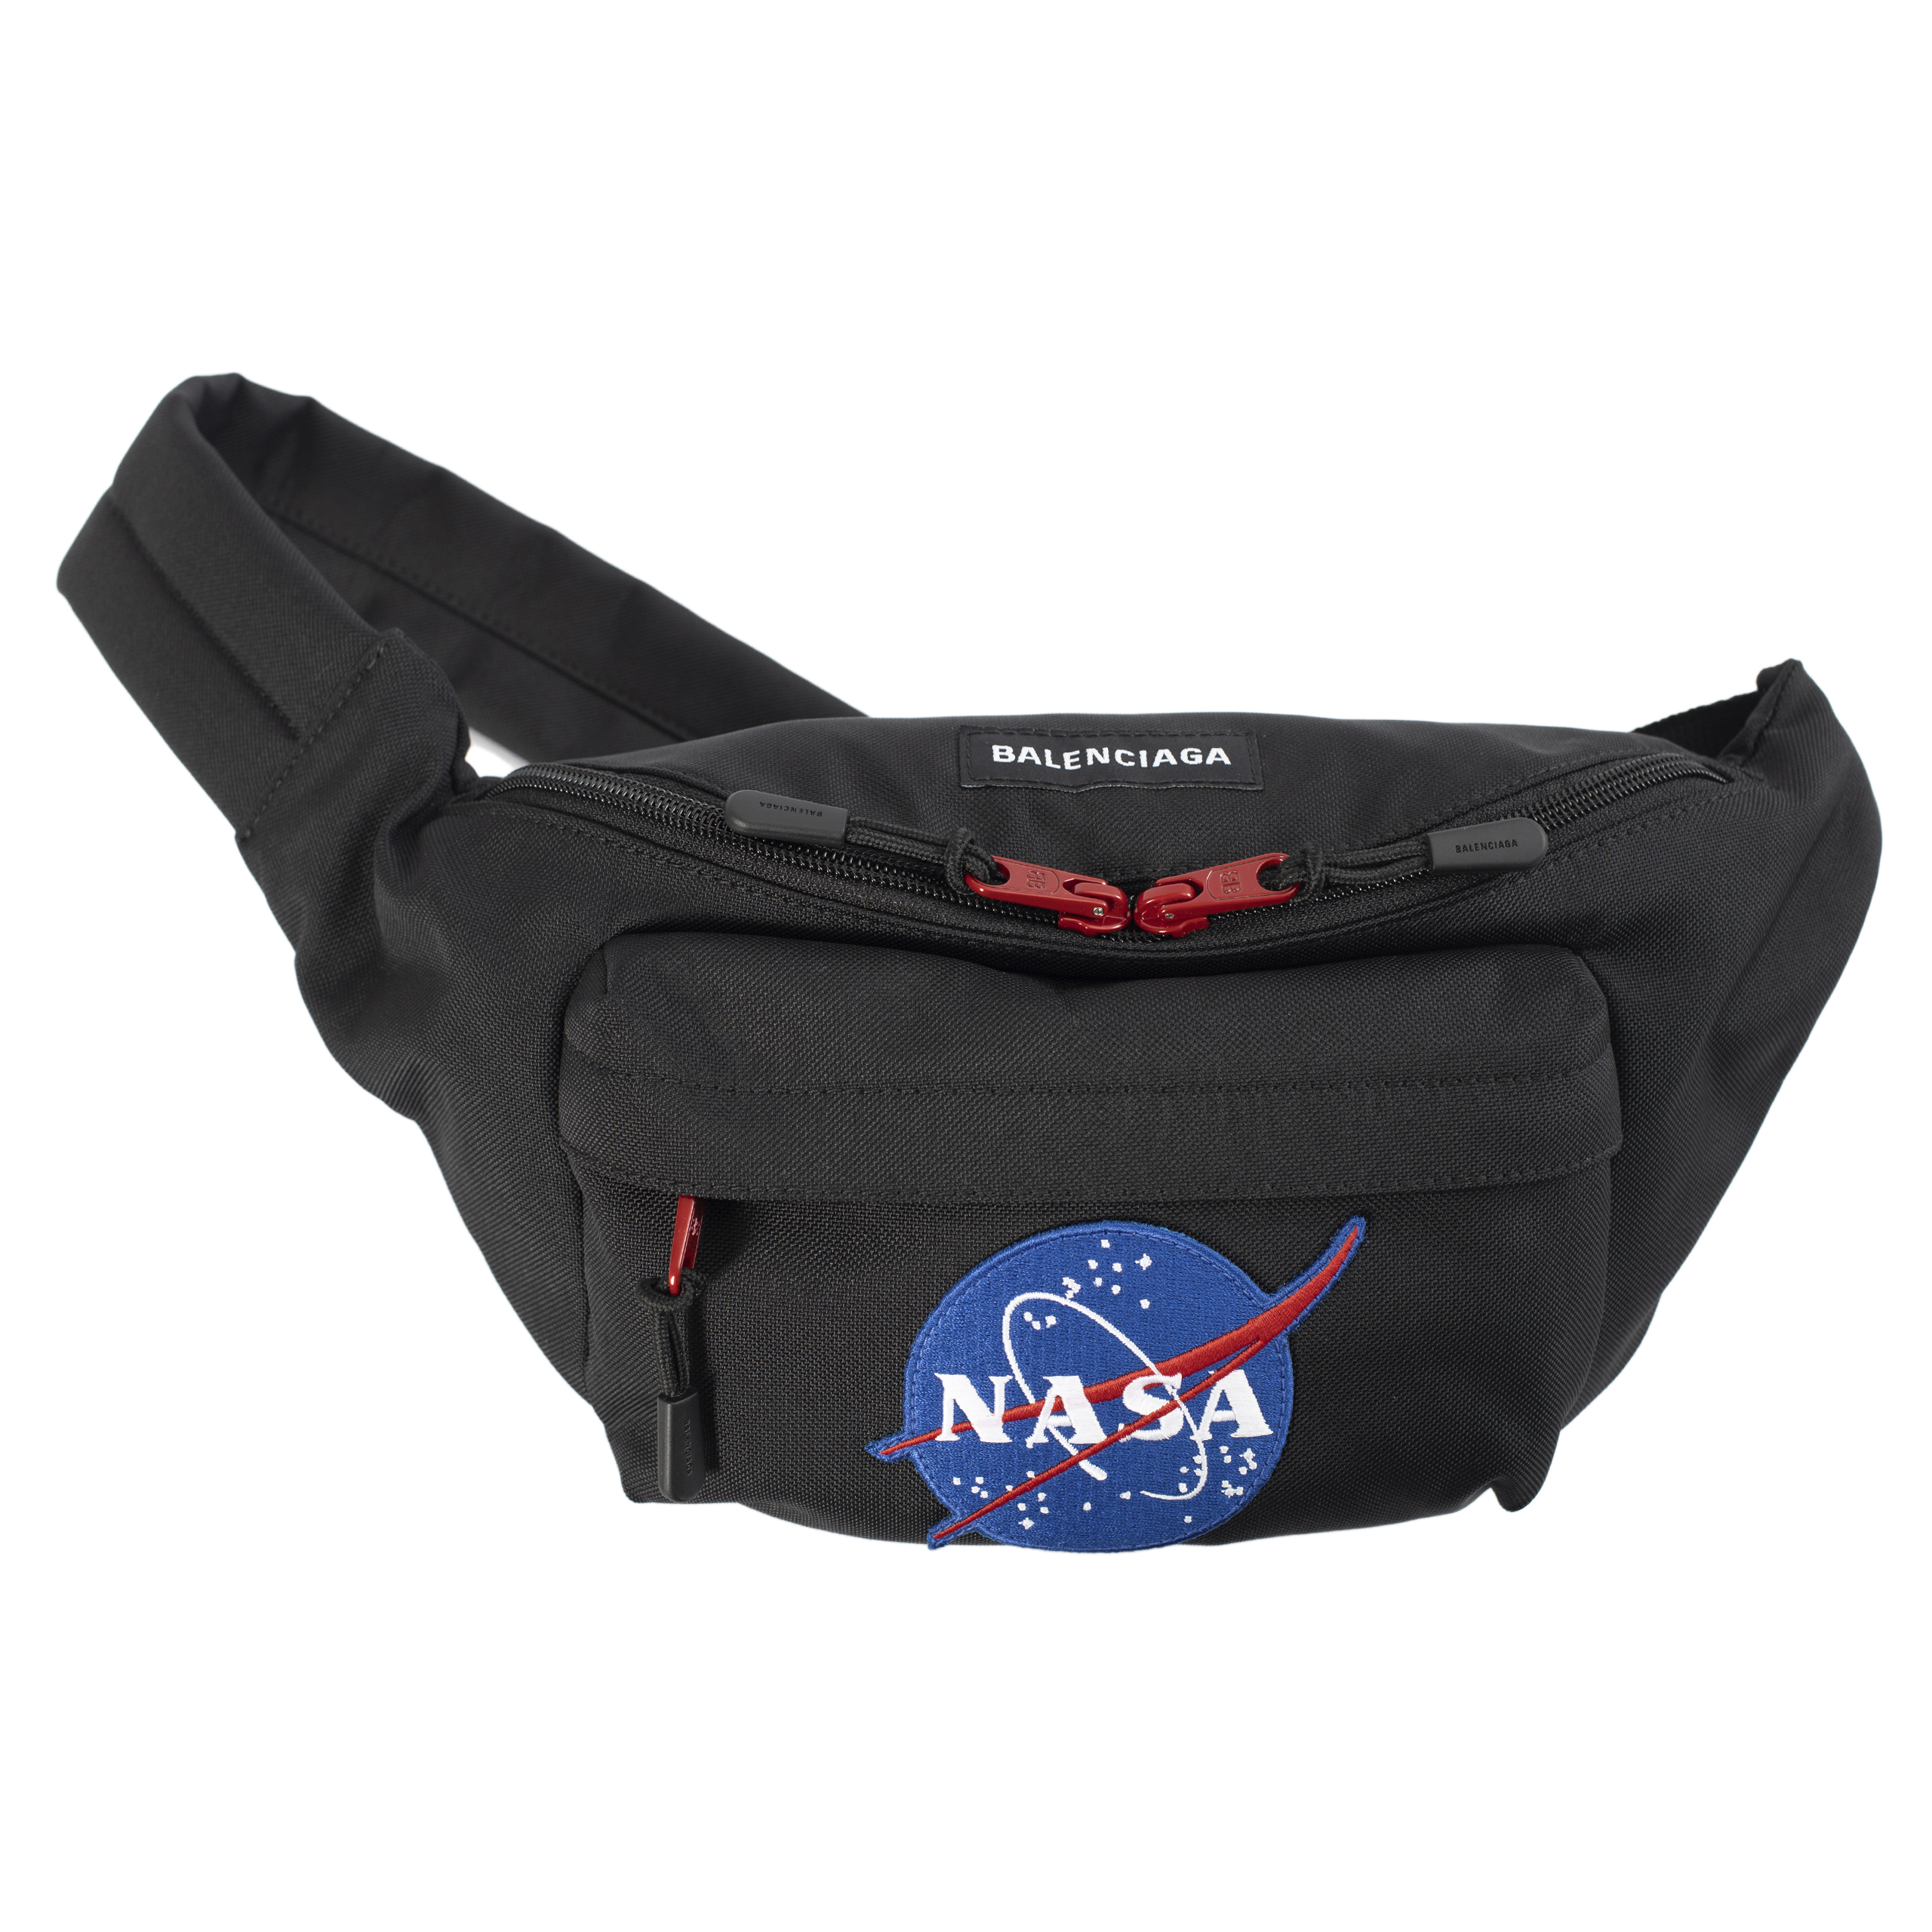 Поясная сумка с вышивкой NASA Balenciaga 659141/2VZ9I/1000, размер One Size